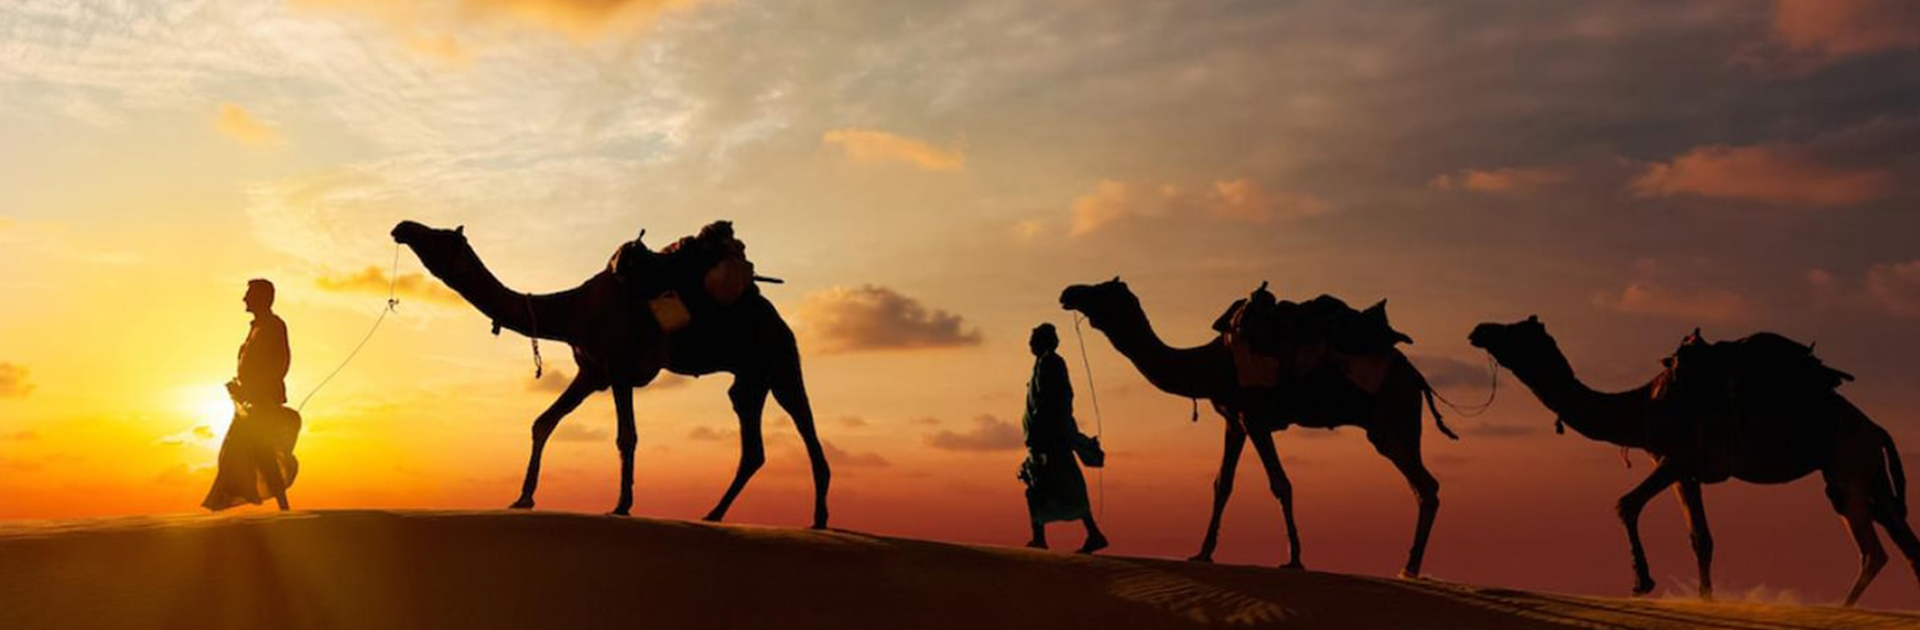 Abu Dhabi Desert Safari | Luxury Desert Safari Abu Dhabi | Safari Packages